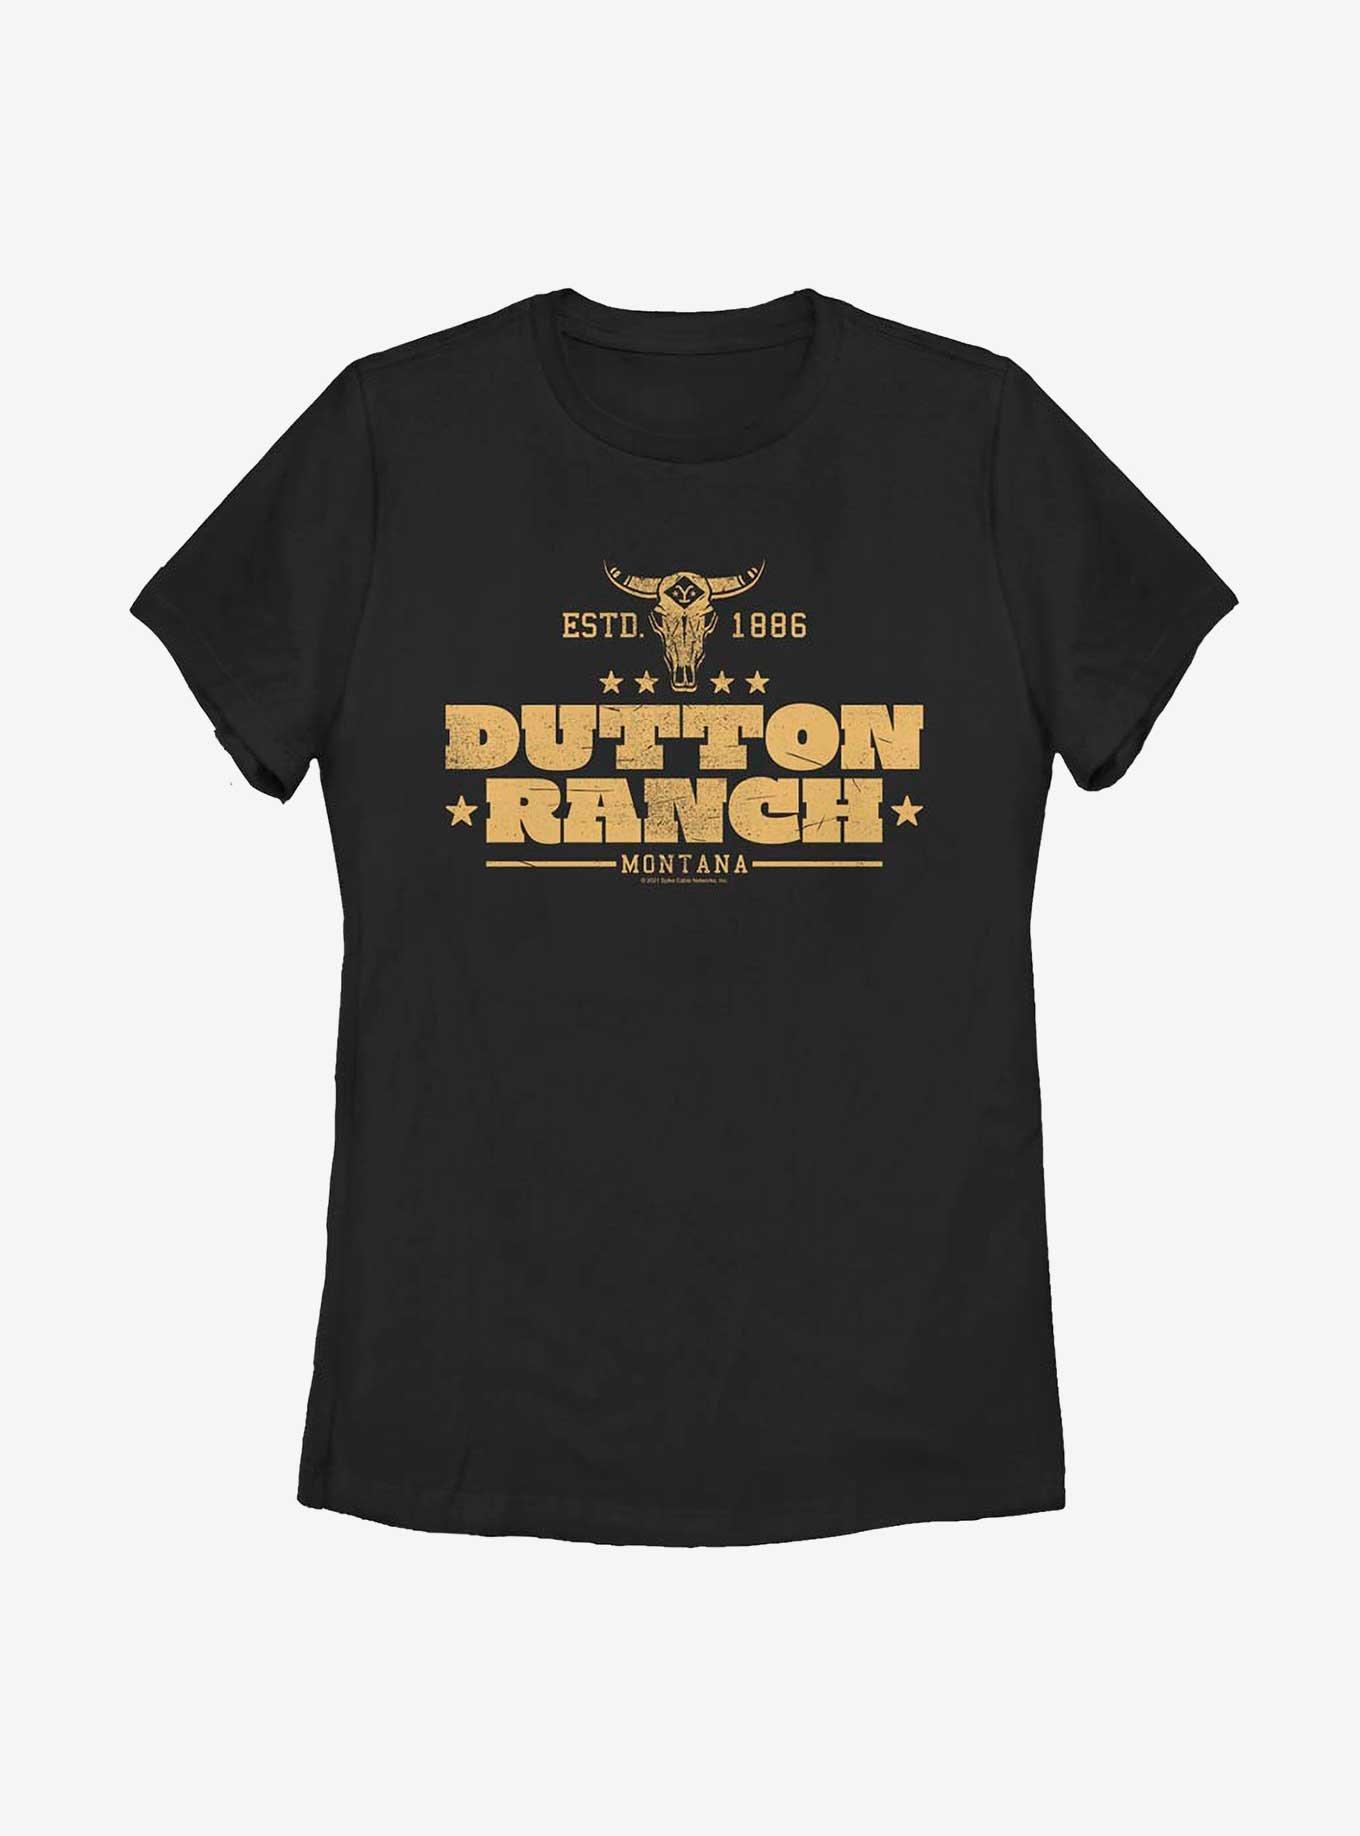 Yellowstone Dutton Ranch Est. 1886 Womens T-Shirt, BLACK, hi-res